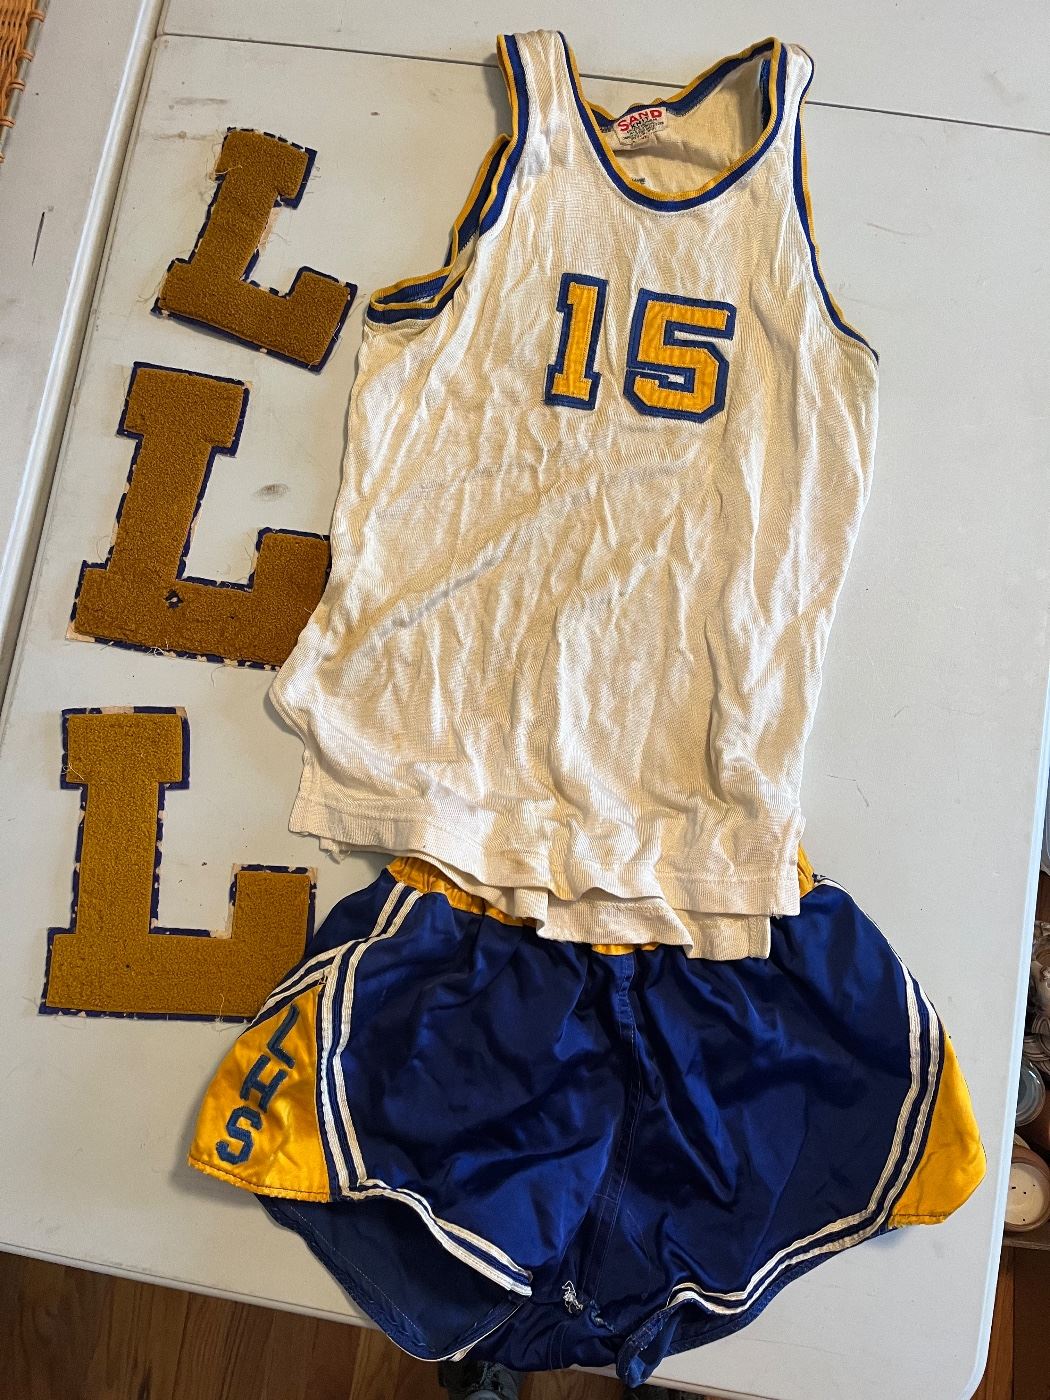 Vintage 1950’s LaPaz basketball uniform and varsity letters